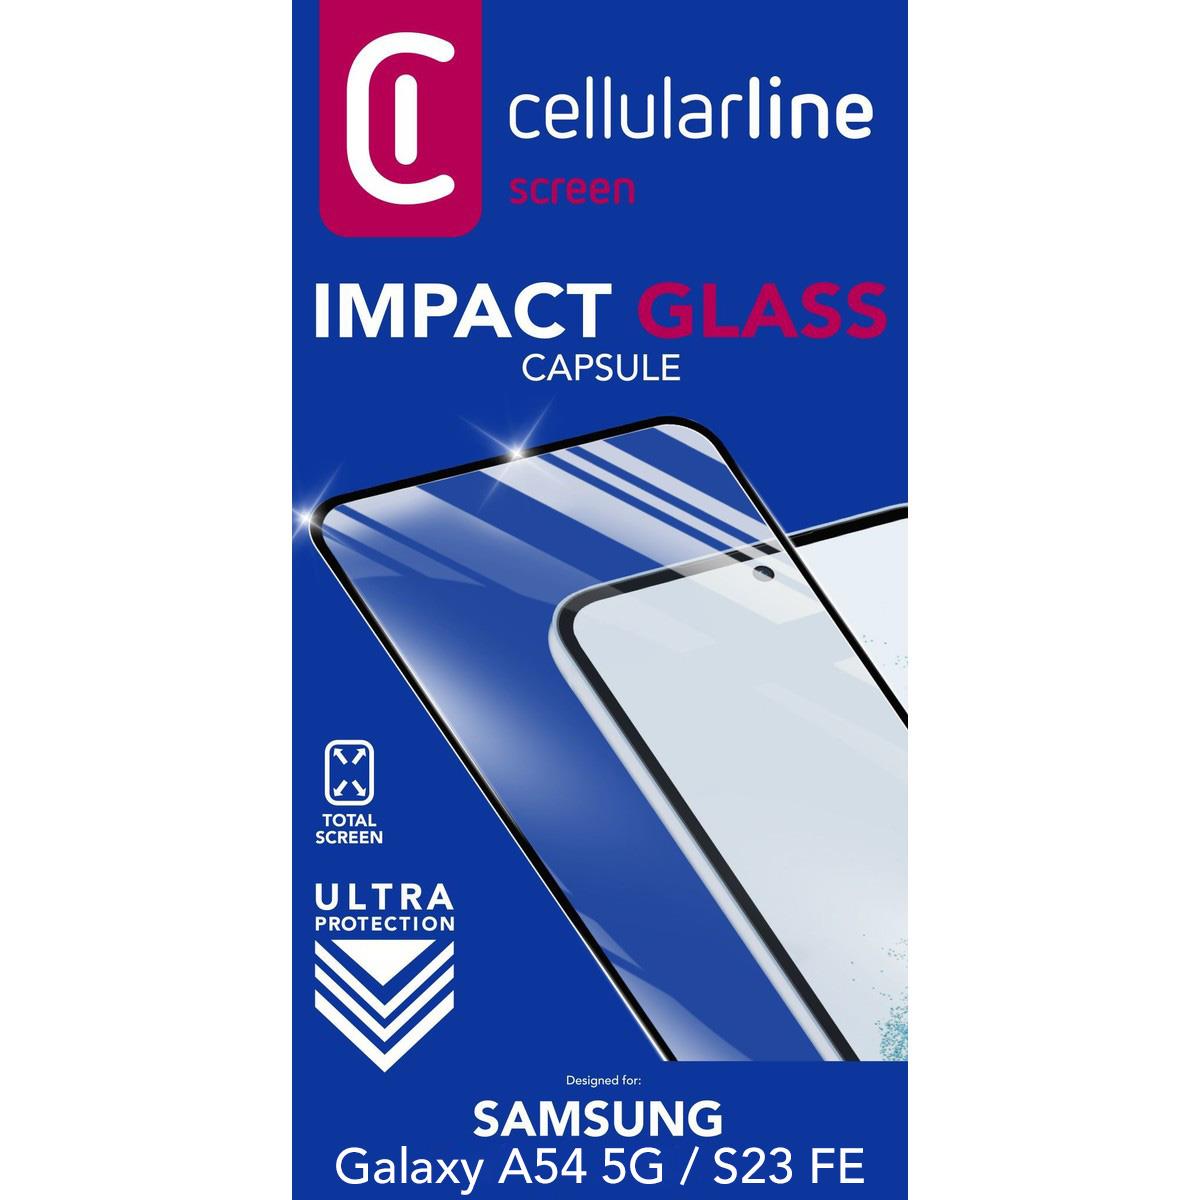 Schutzglas IMPACT GLASS CAPSULE für Samsung Galaxy A54 5G / S23 FE